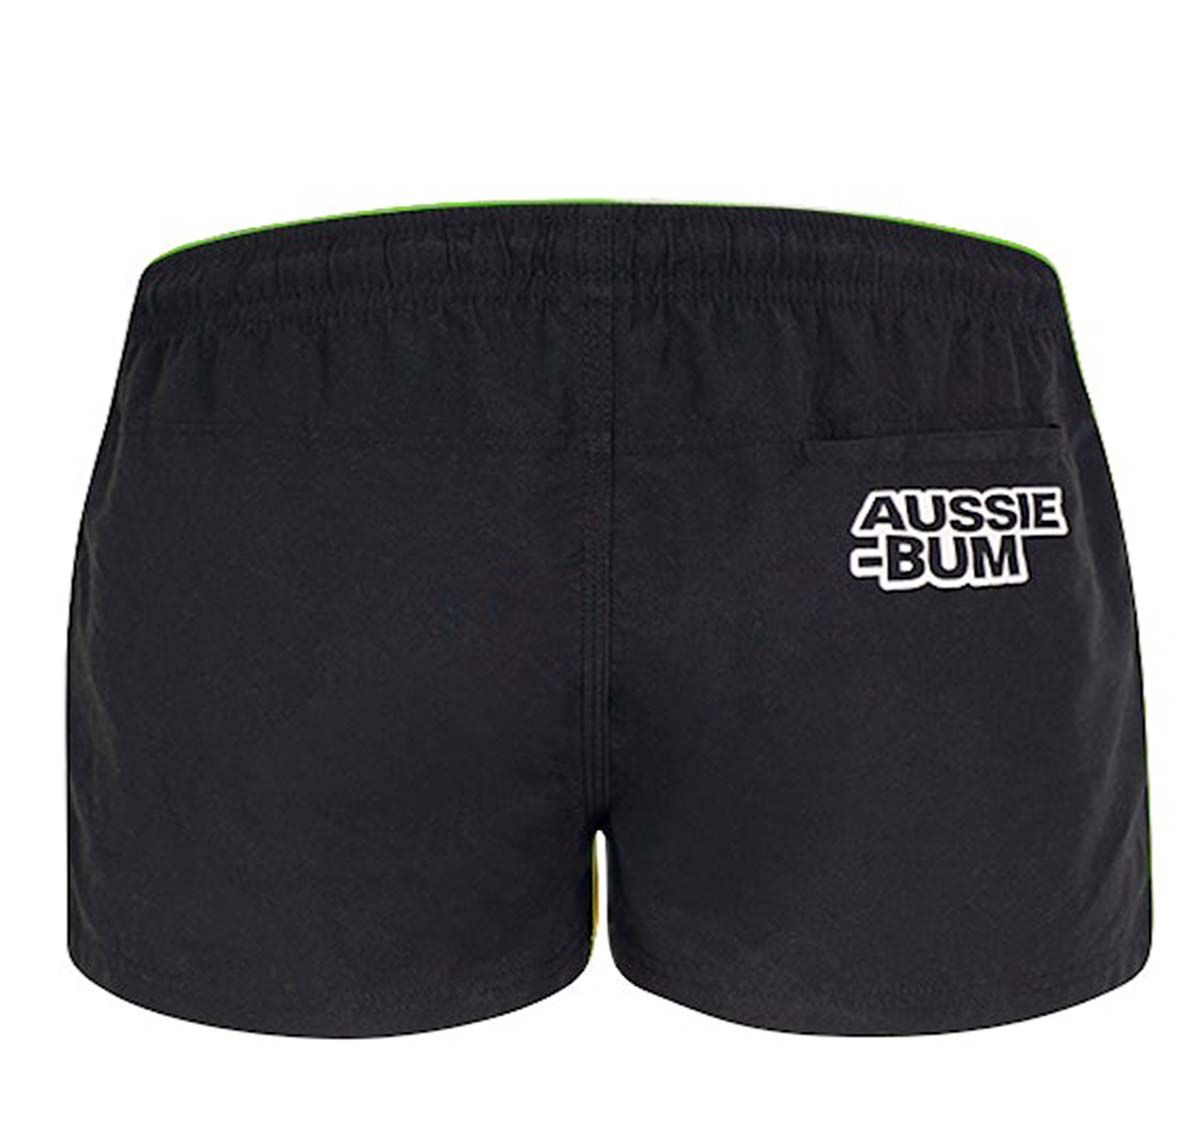 aussieBum swim shorts REEF BLACK Shorts, black